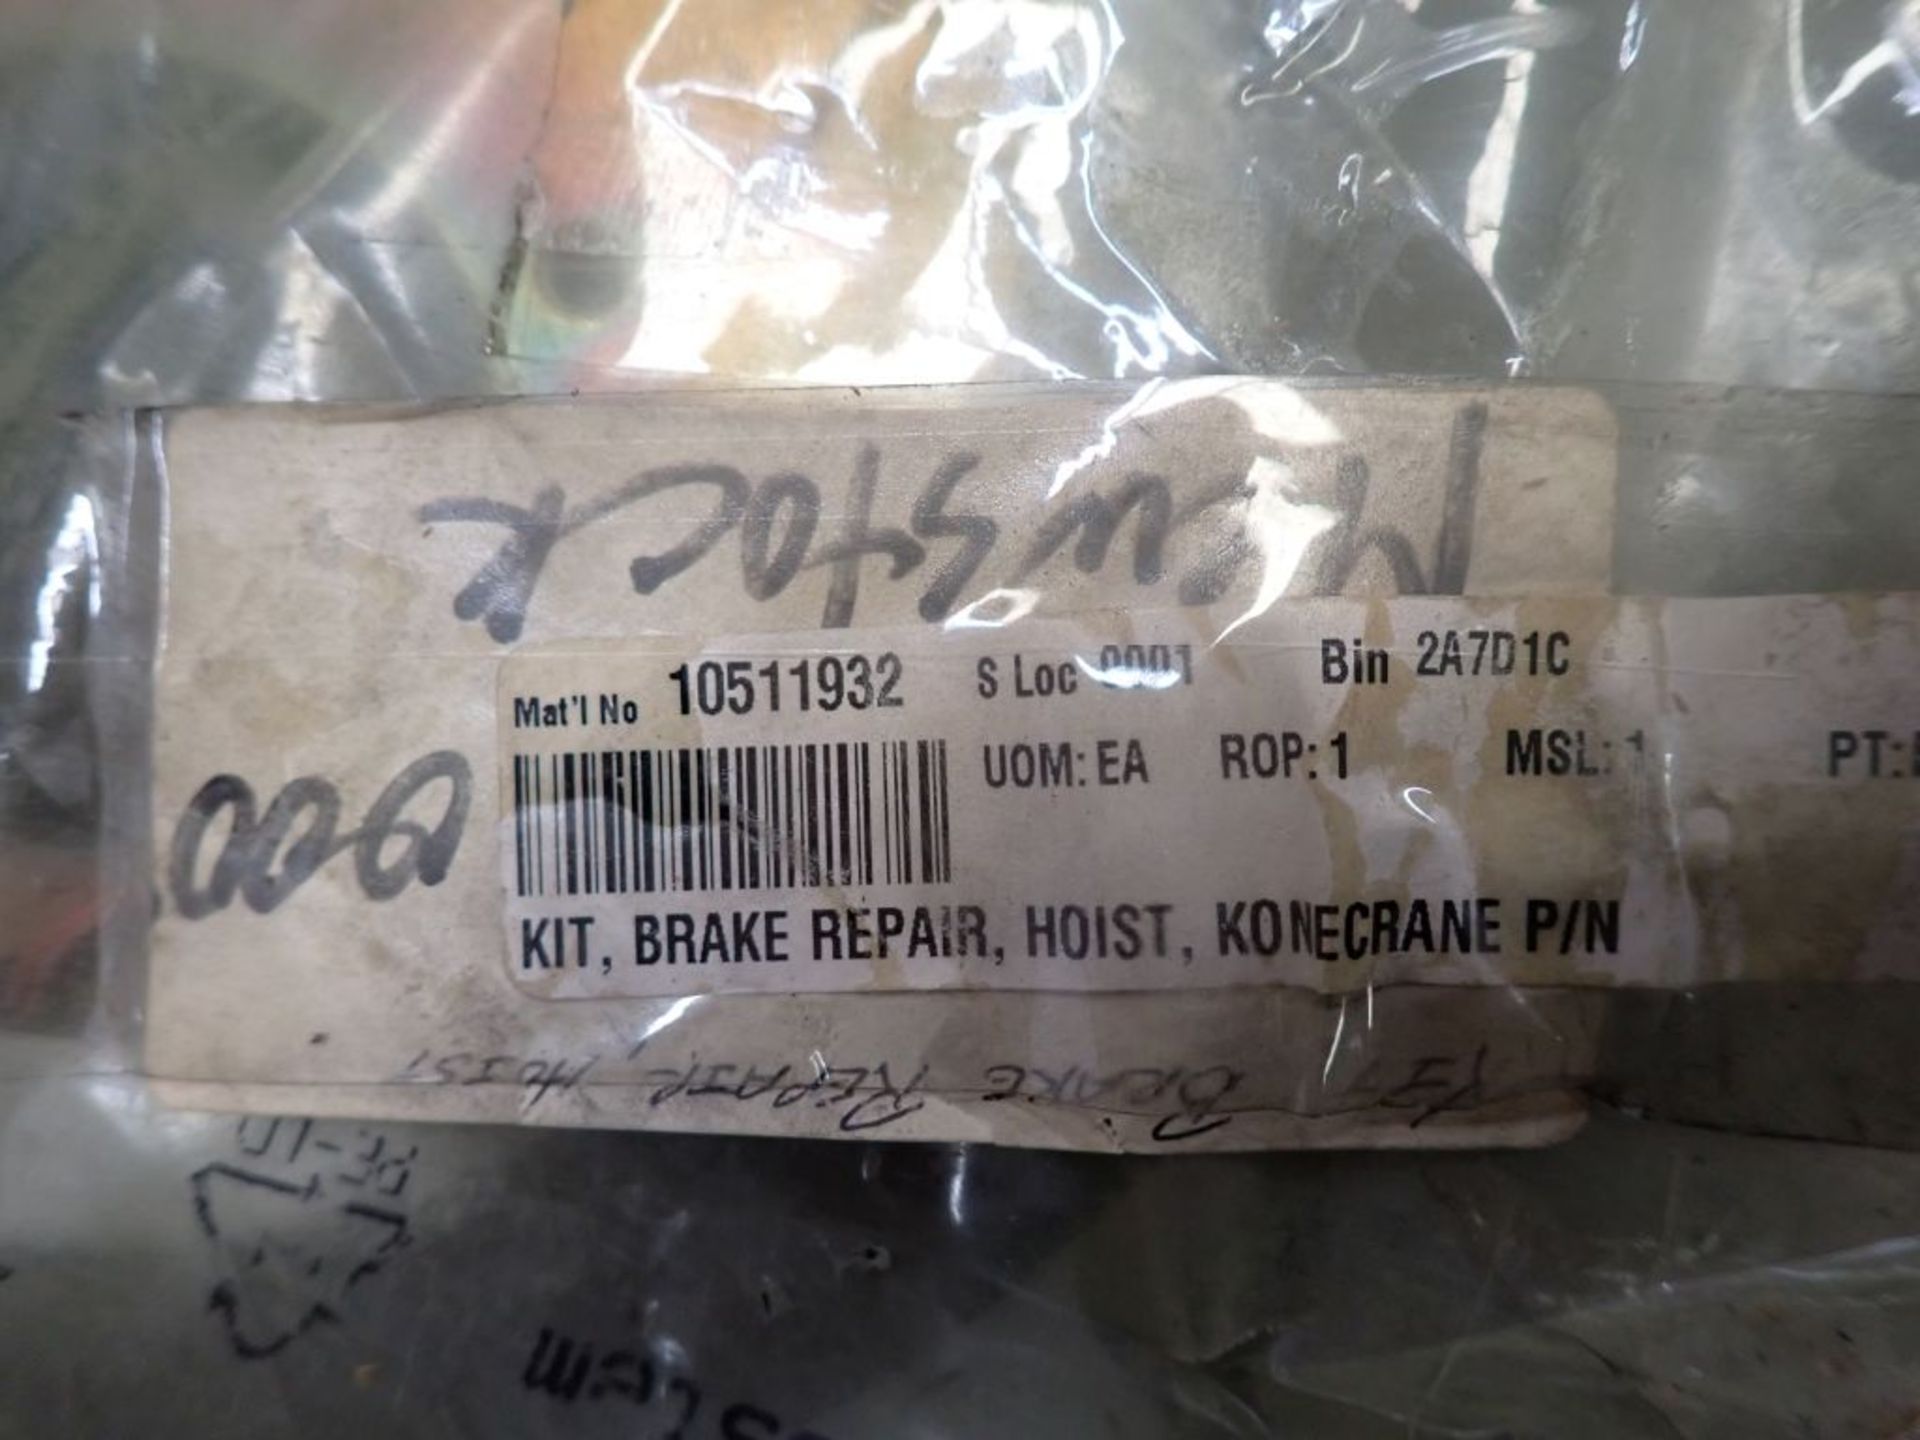 Konecrane Brake Repair Hoist Kit | Tag: 232077 - Image 2 of 4